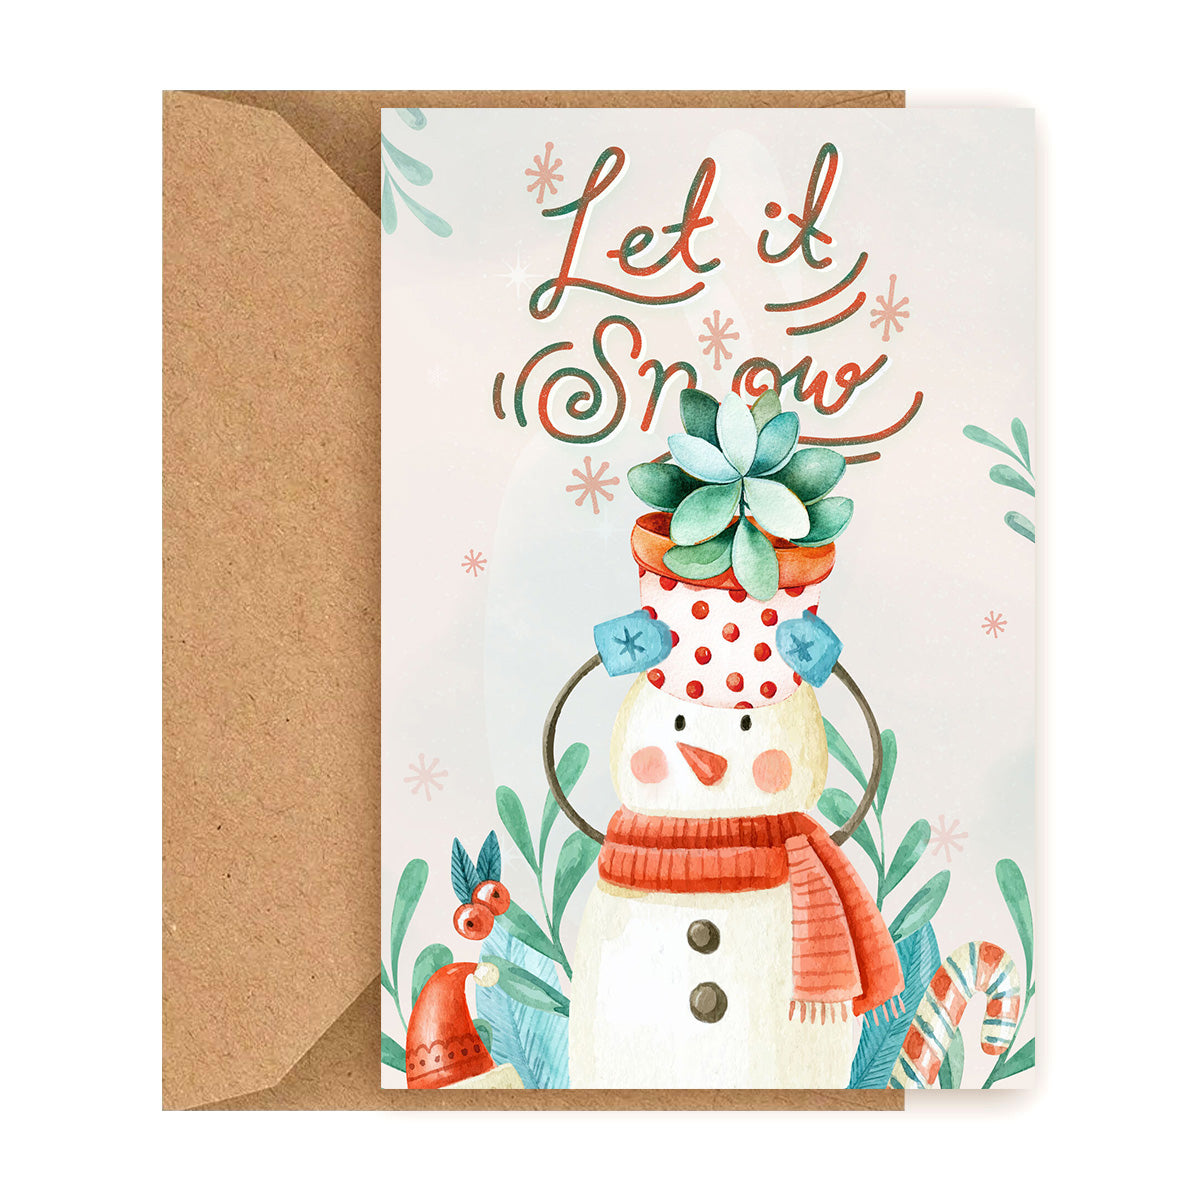 Merry Christmas Card, Let it snow card, Snow Christmas card, Snowman Christmas Card, Succulent Christmas Card, Christmas gift ideas